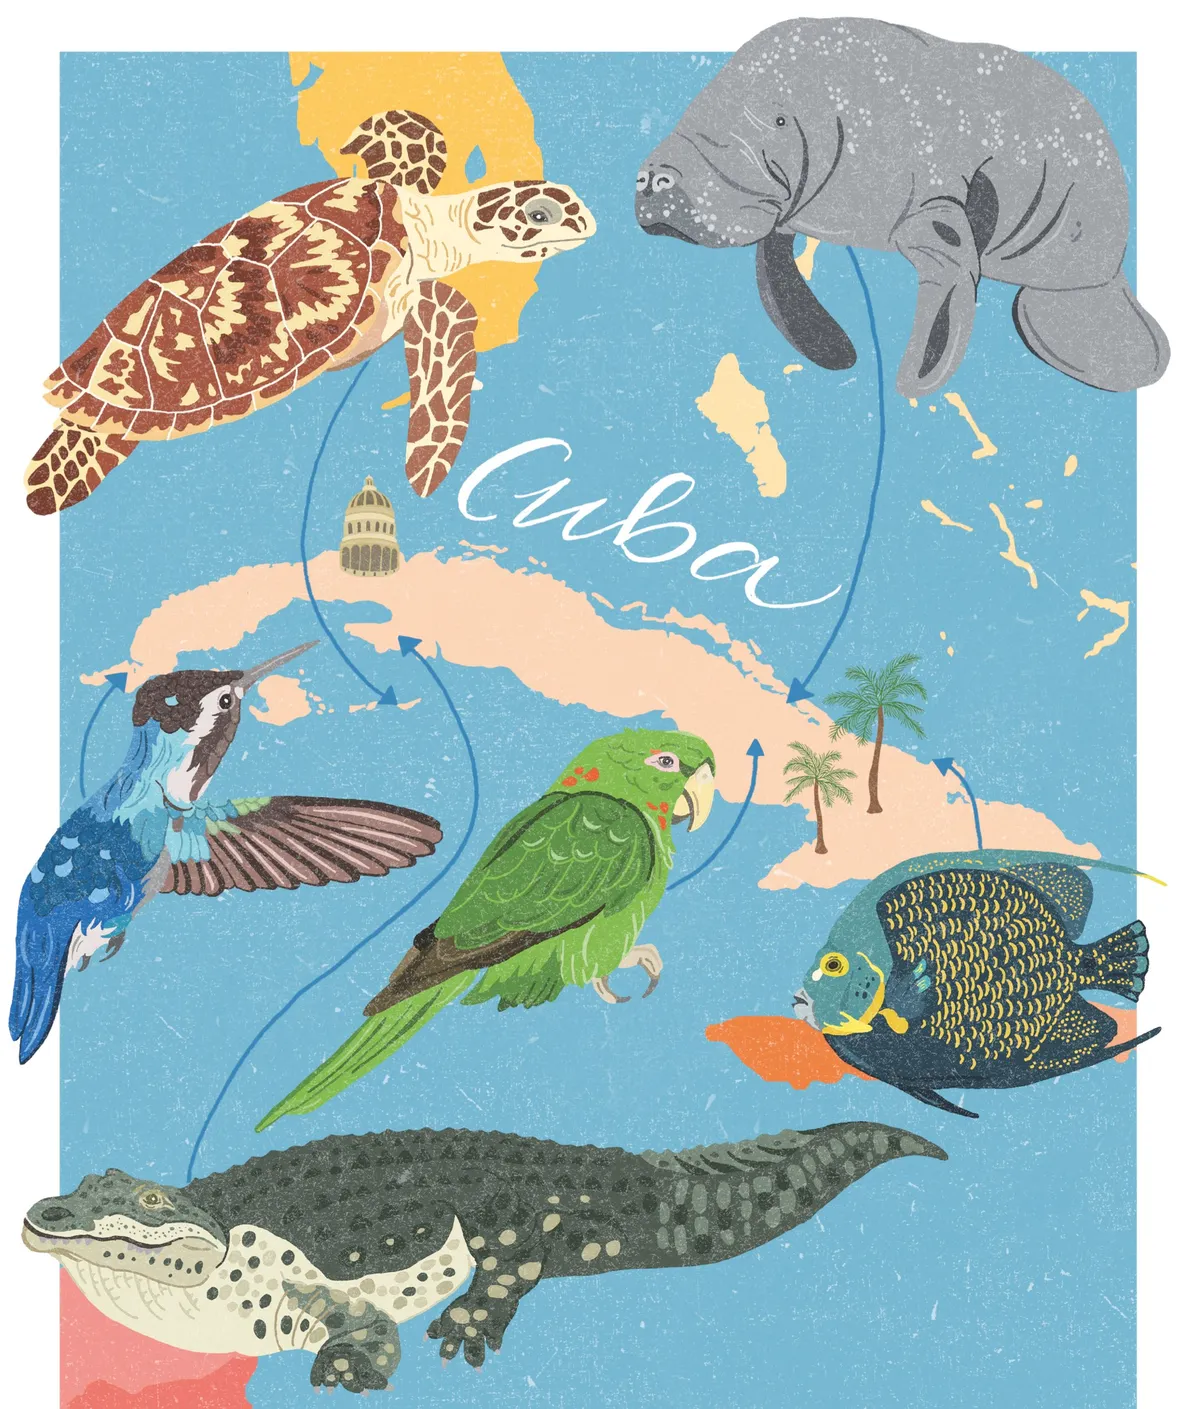 Cuba wildlife illustration. © Dawn Cooper